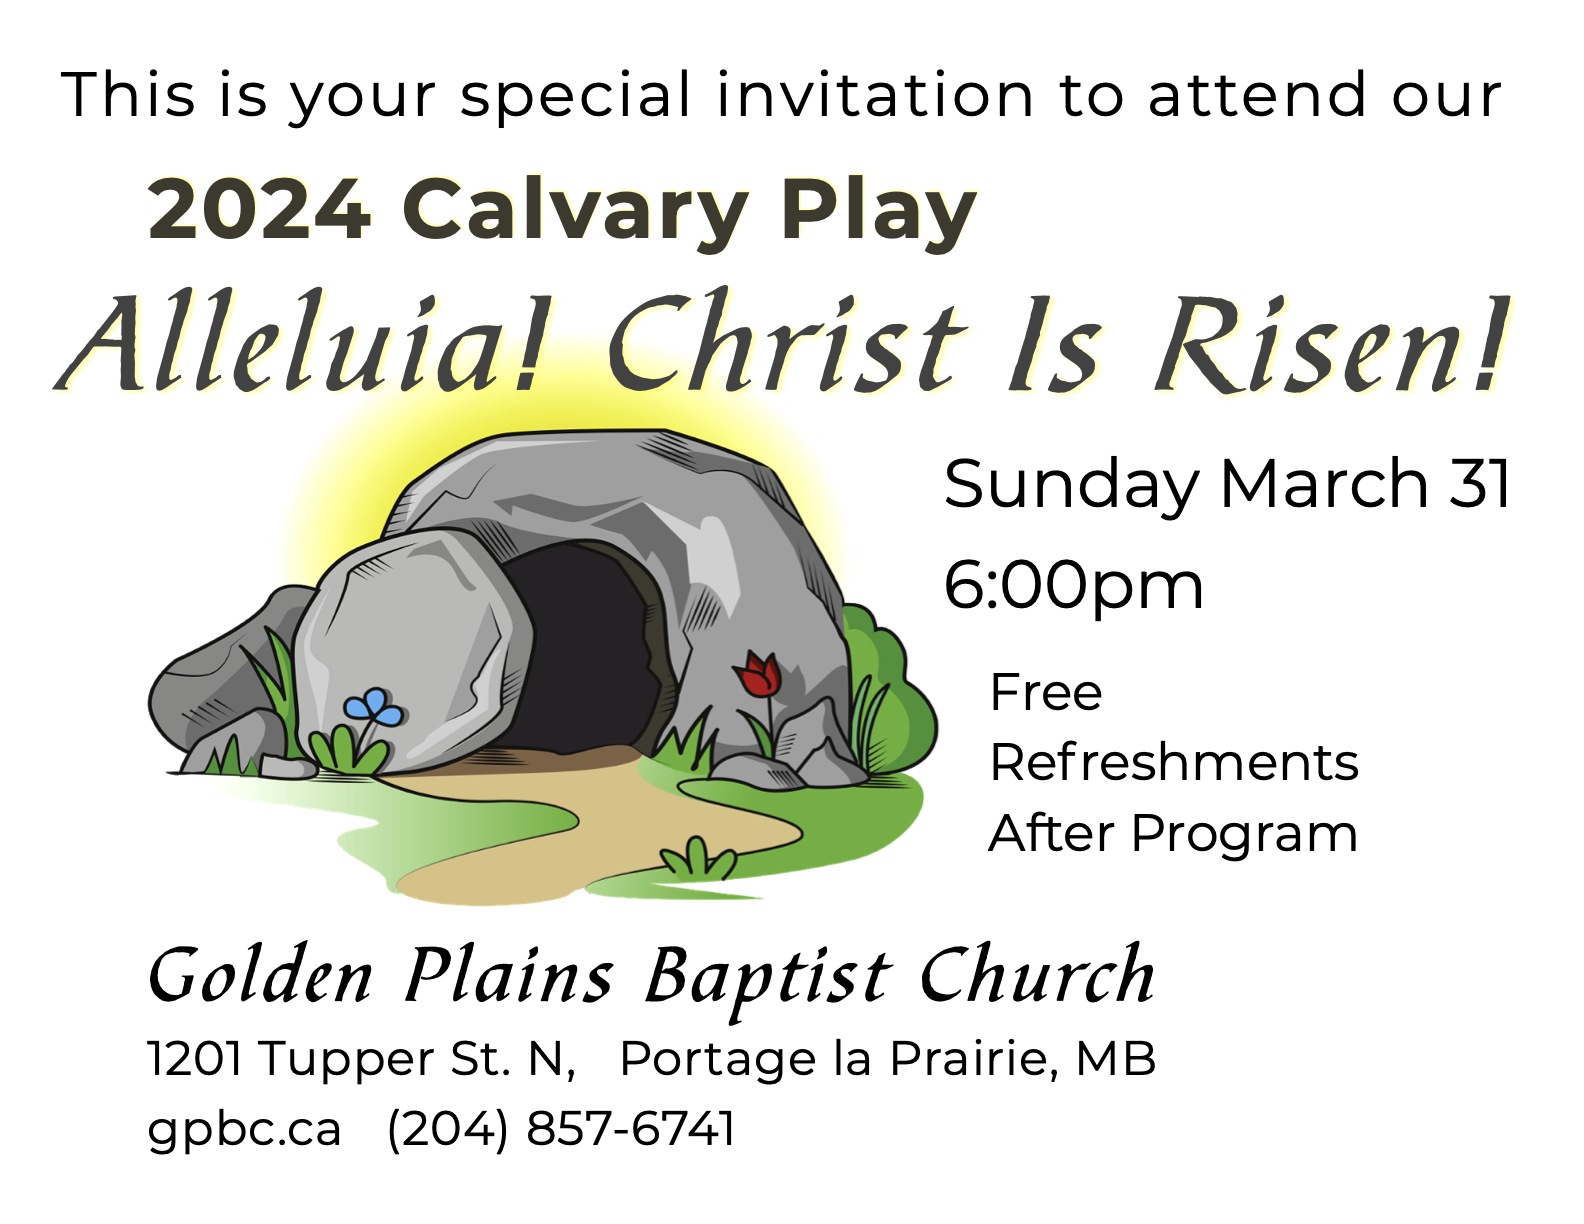 2024 Calvary Play Sunday March 31 6:00pm